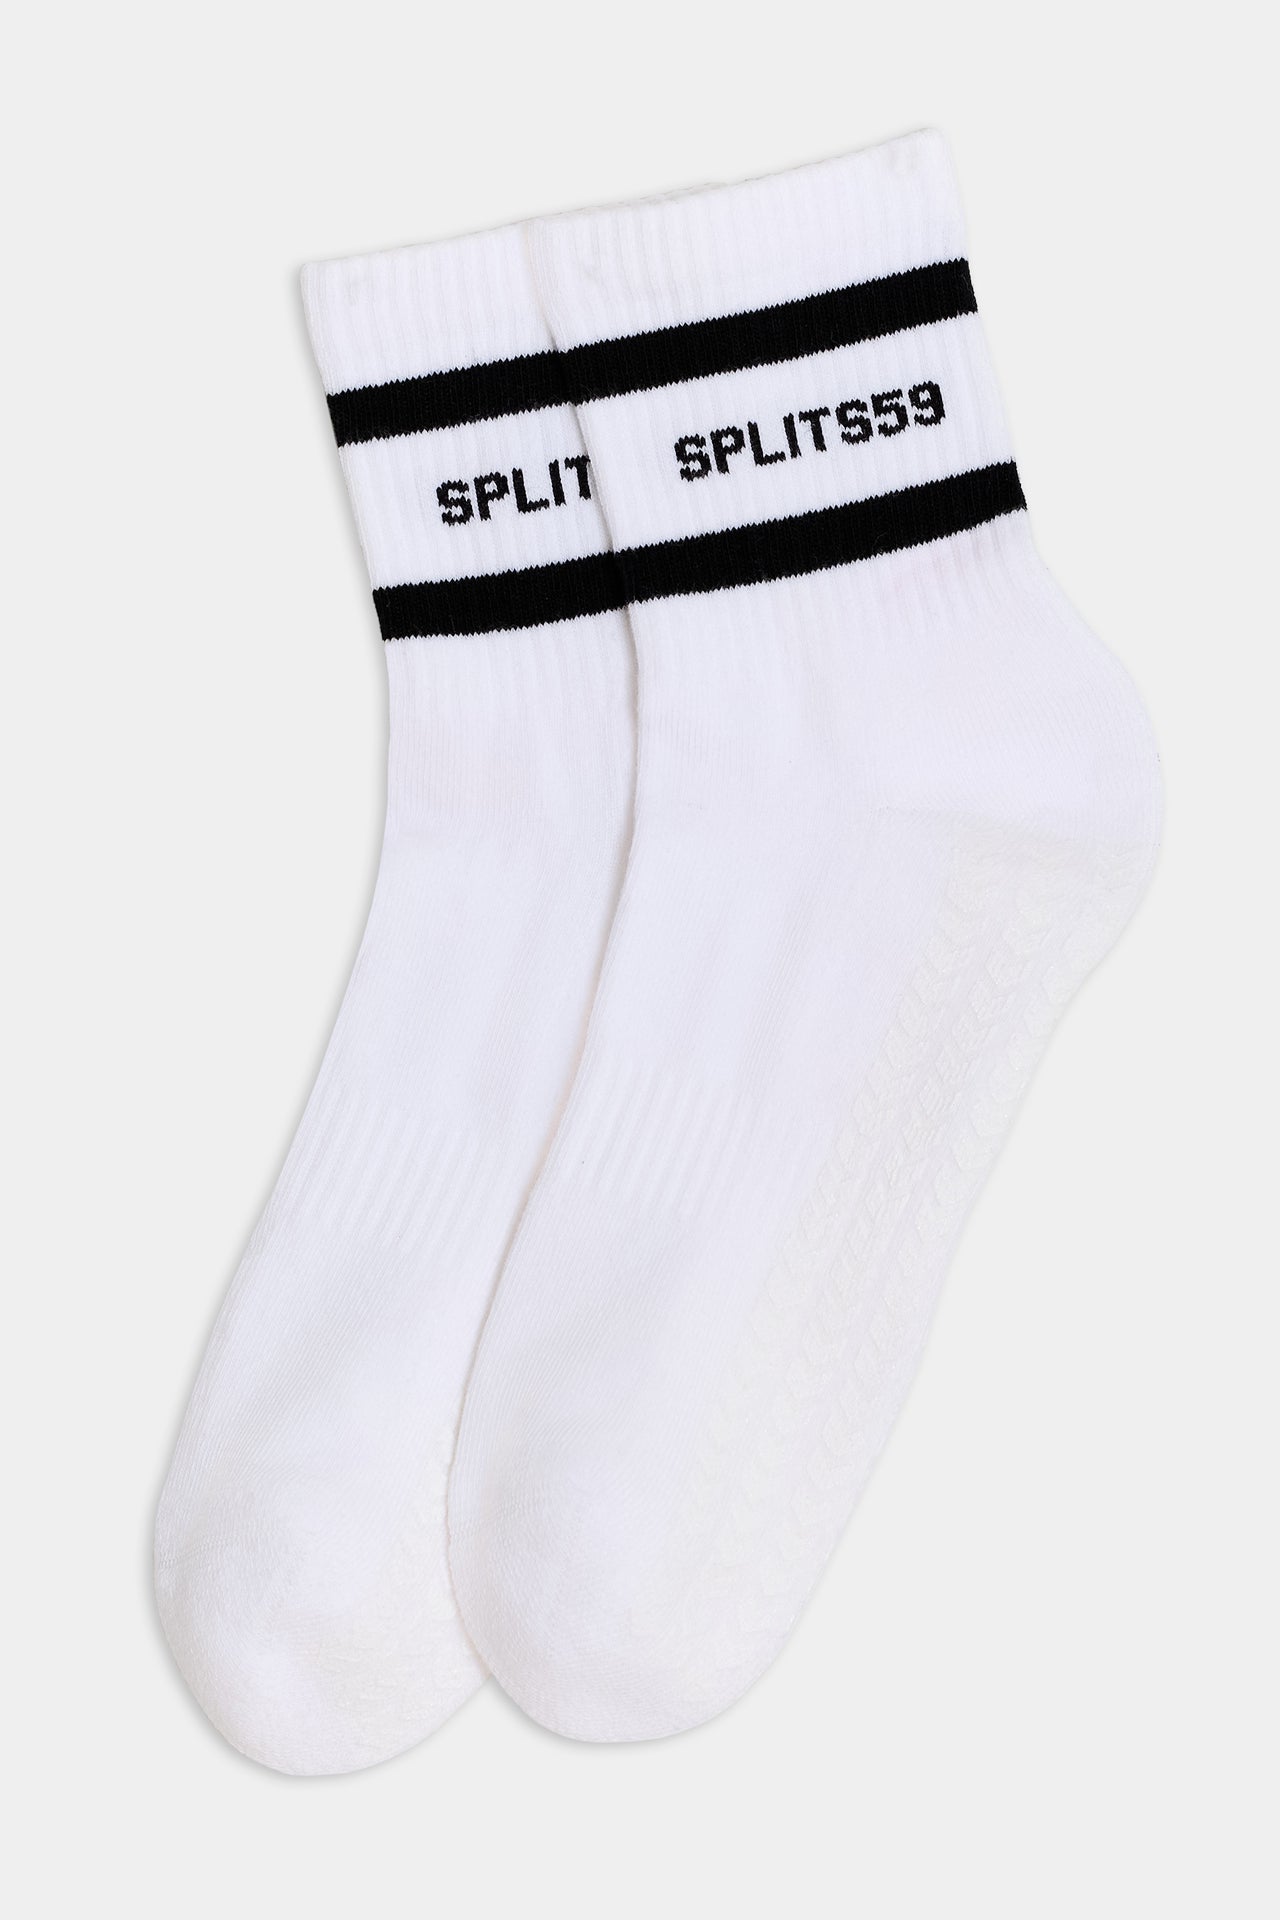 A pair of sporty SPLITS59 Logo Stripe ankle socks with black and white stripes.